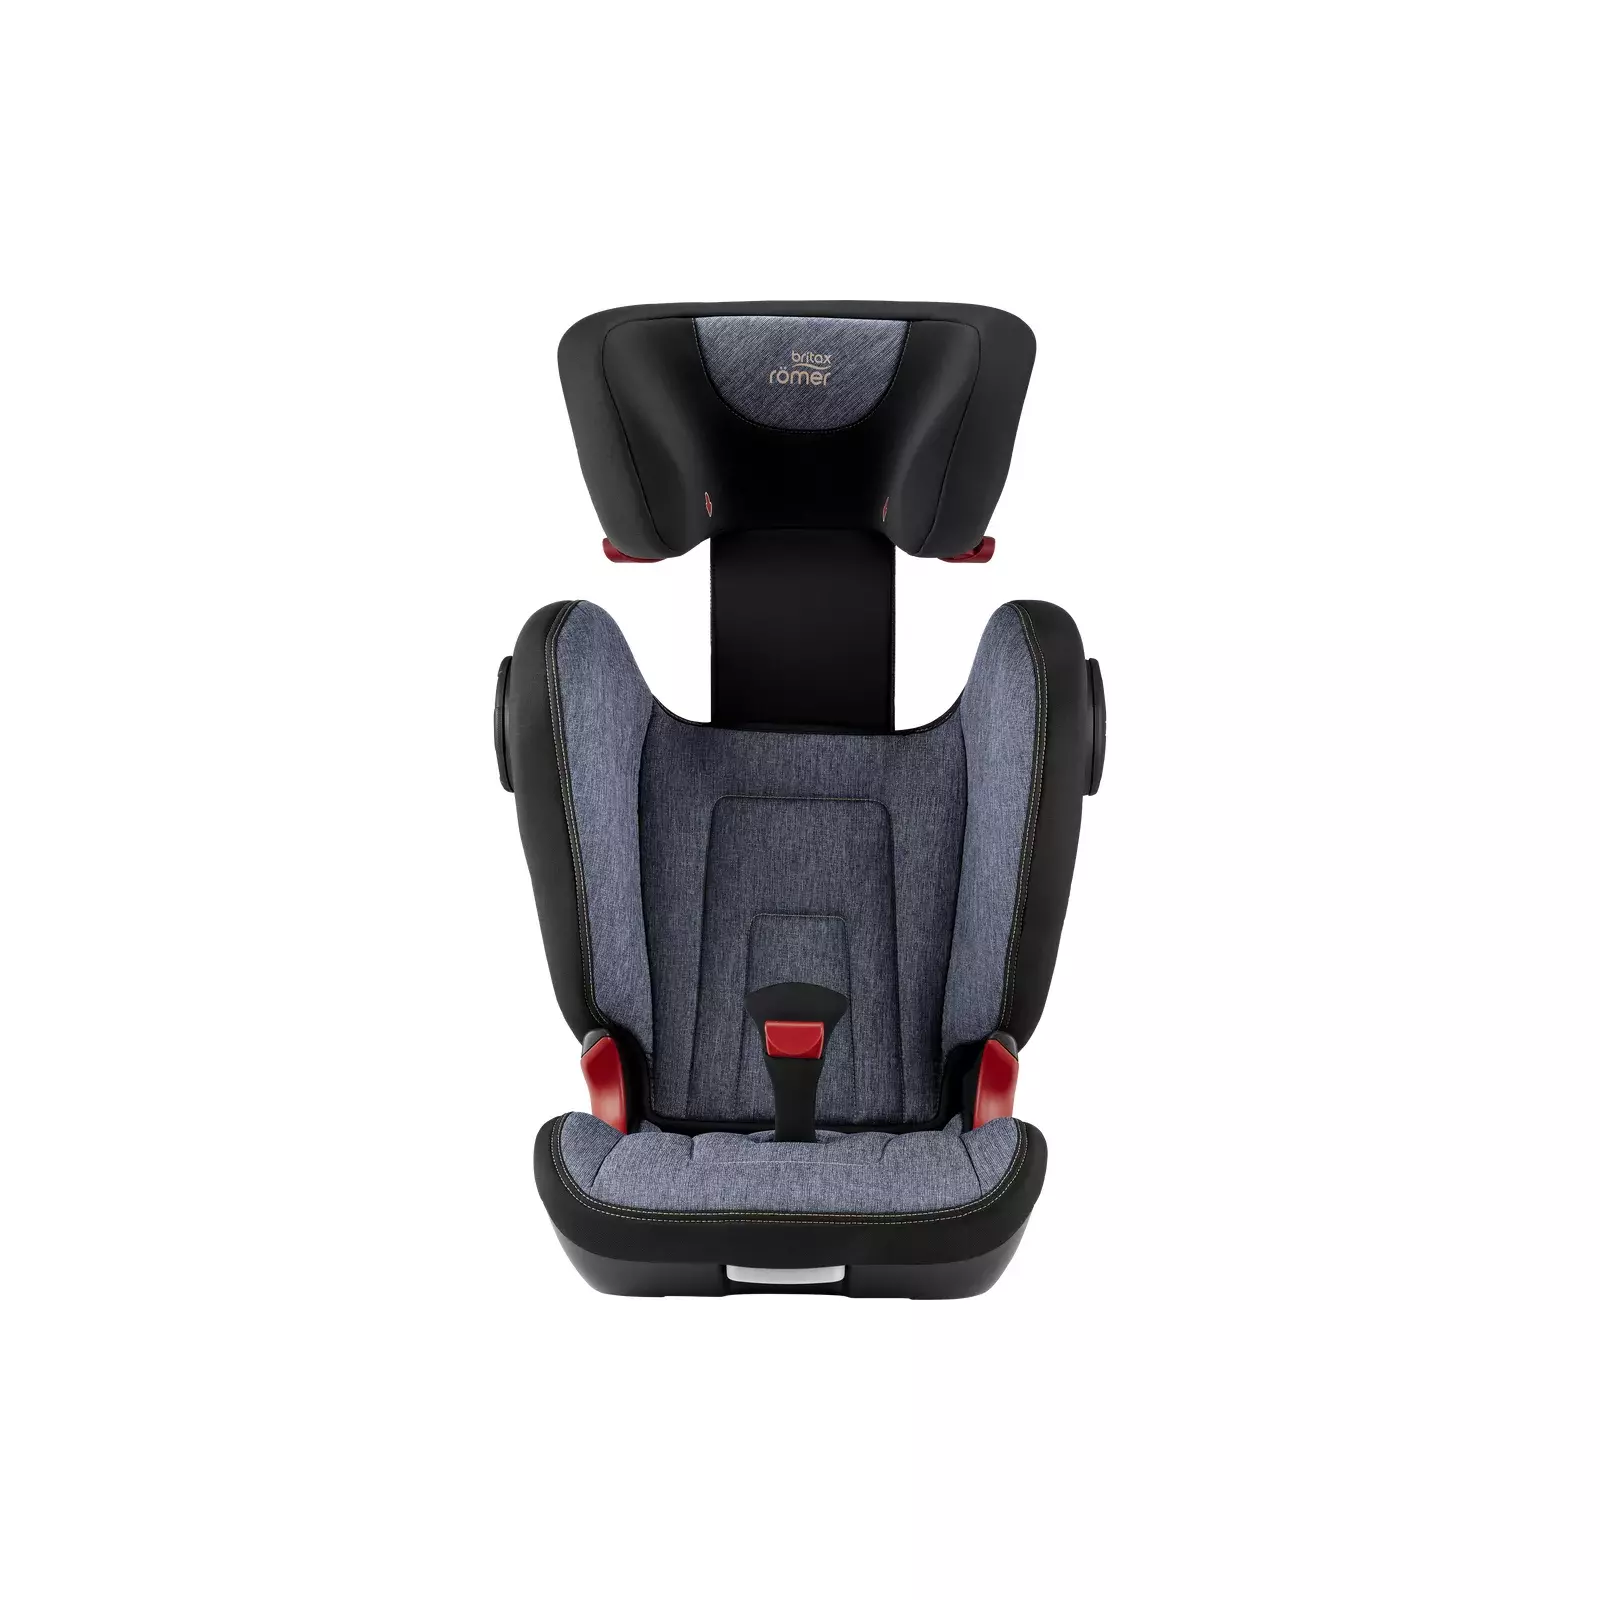 Britax Römer KIDFIX 2 S Car Seat - Reviews